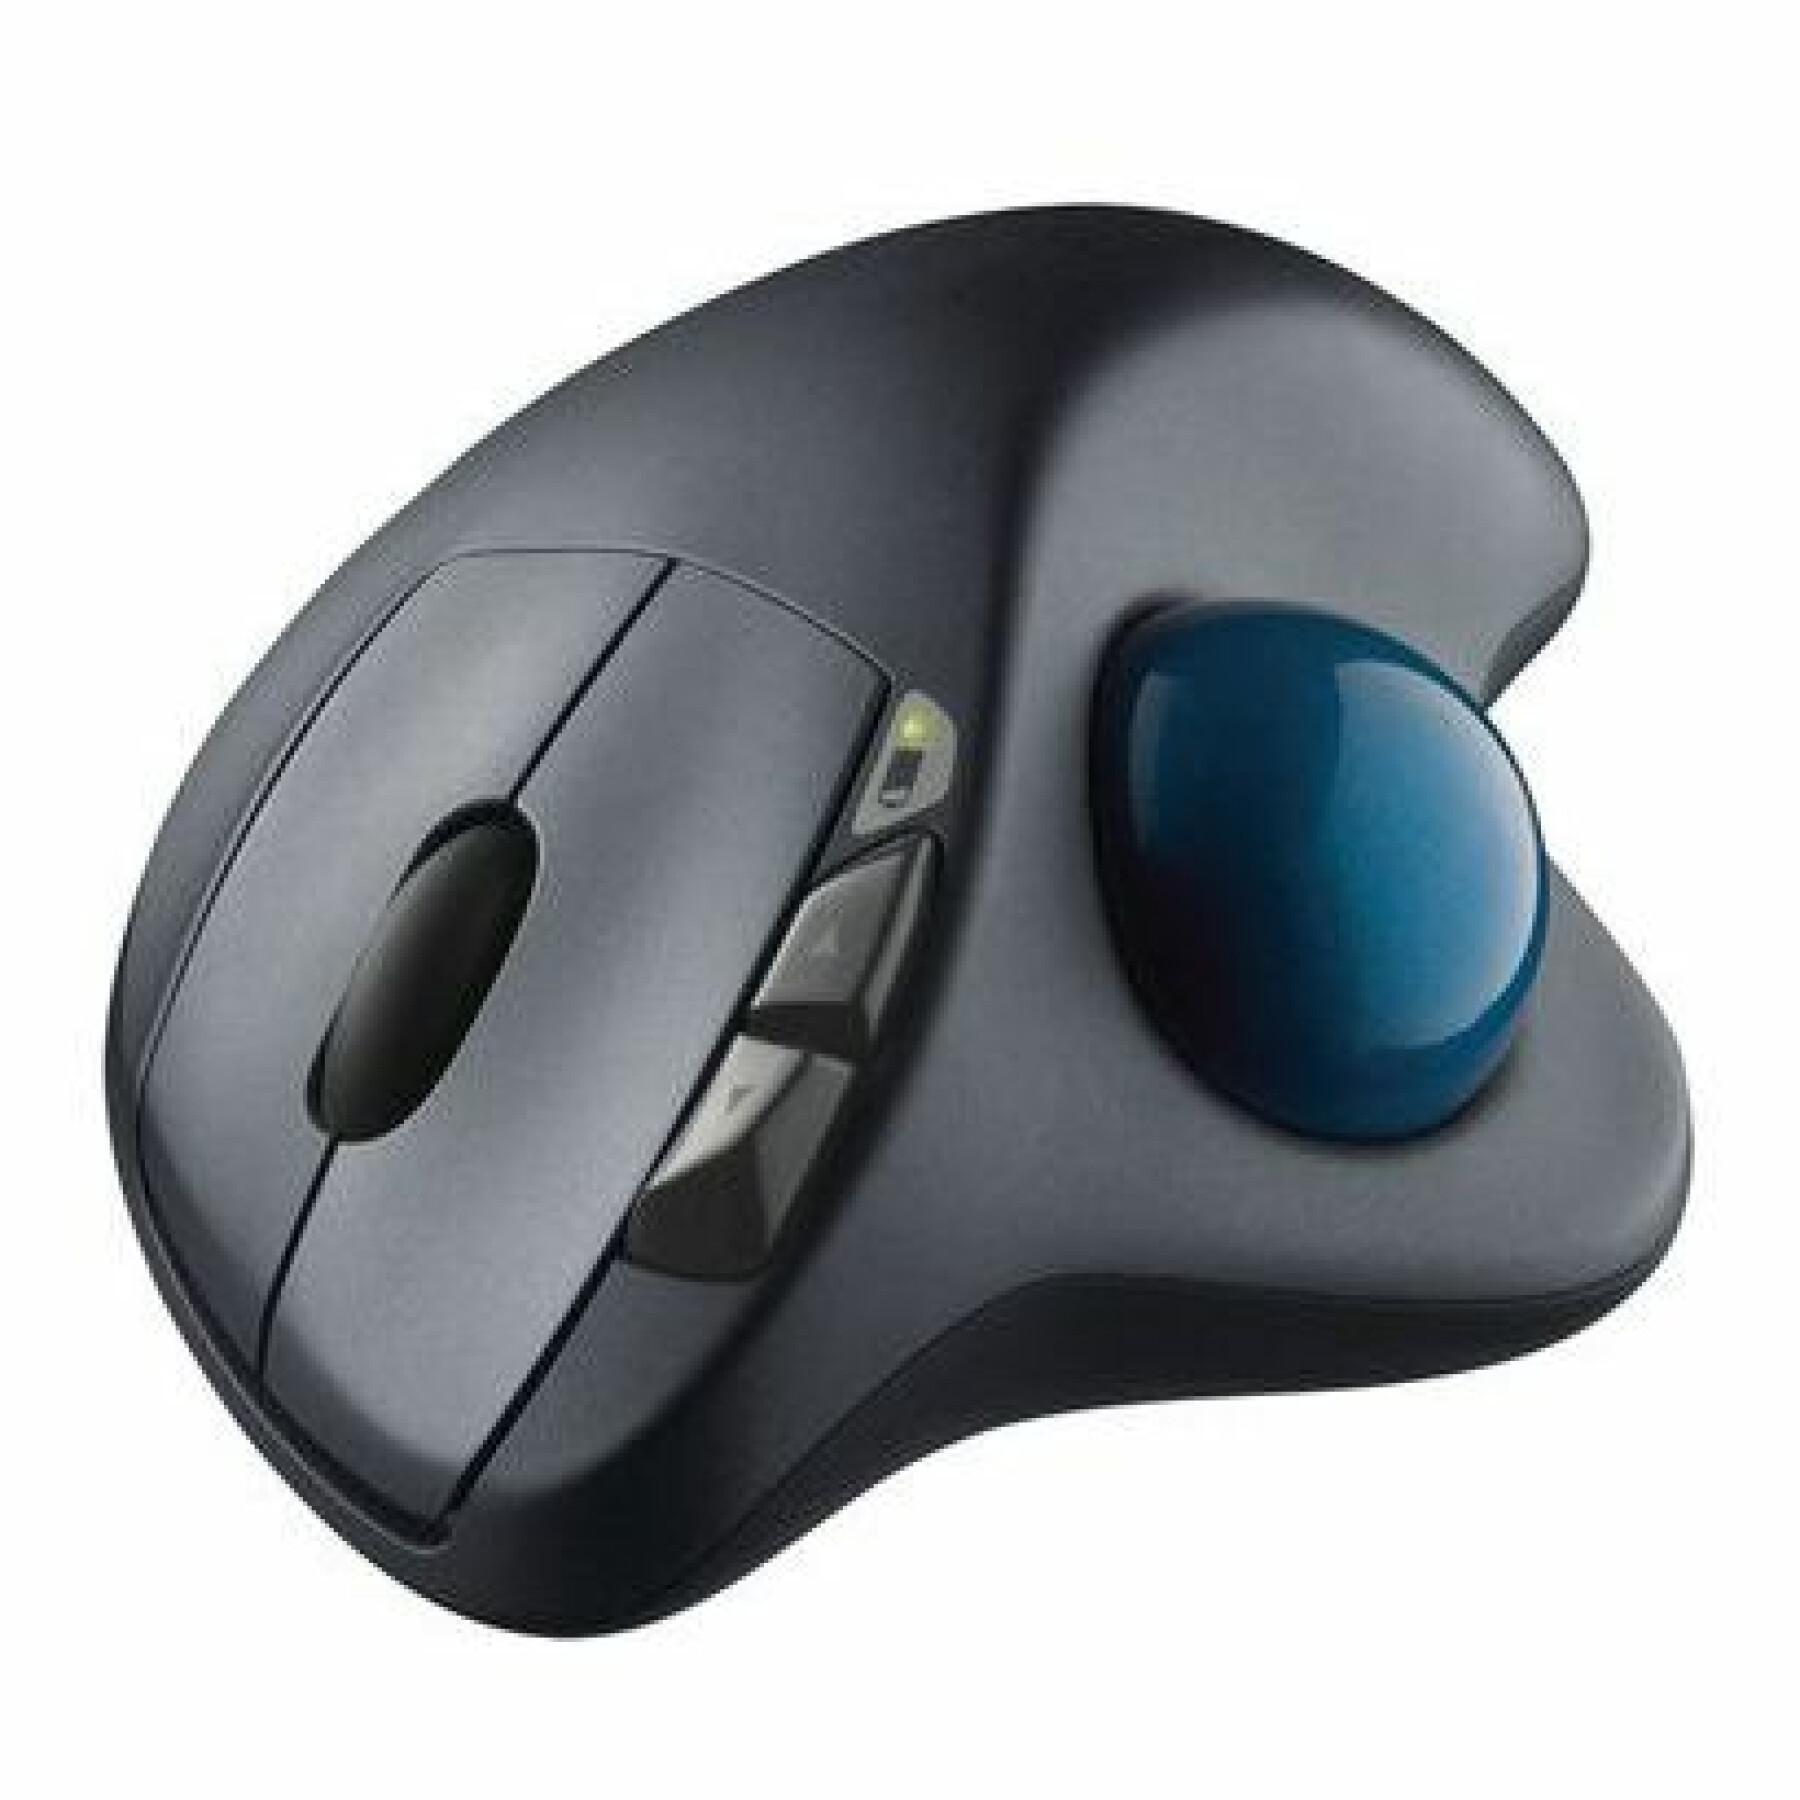 Wireless mouse M.C Marine SR-TR03 Trackball Logitech